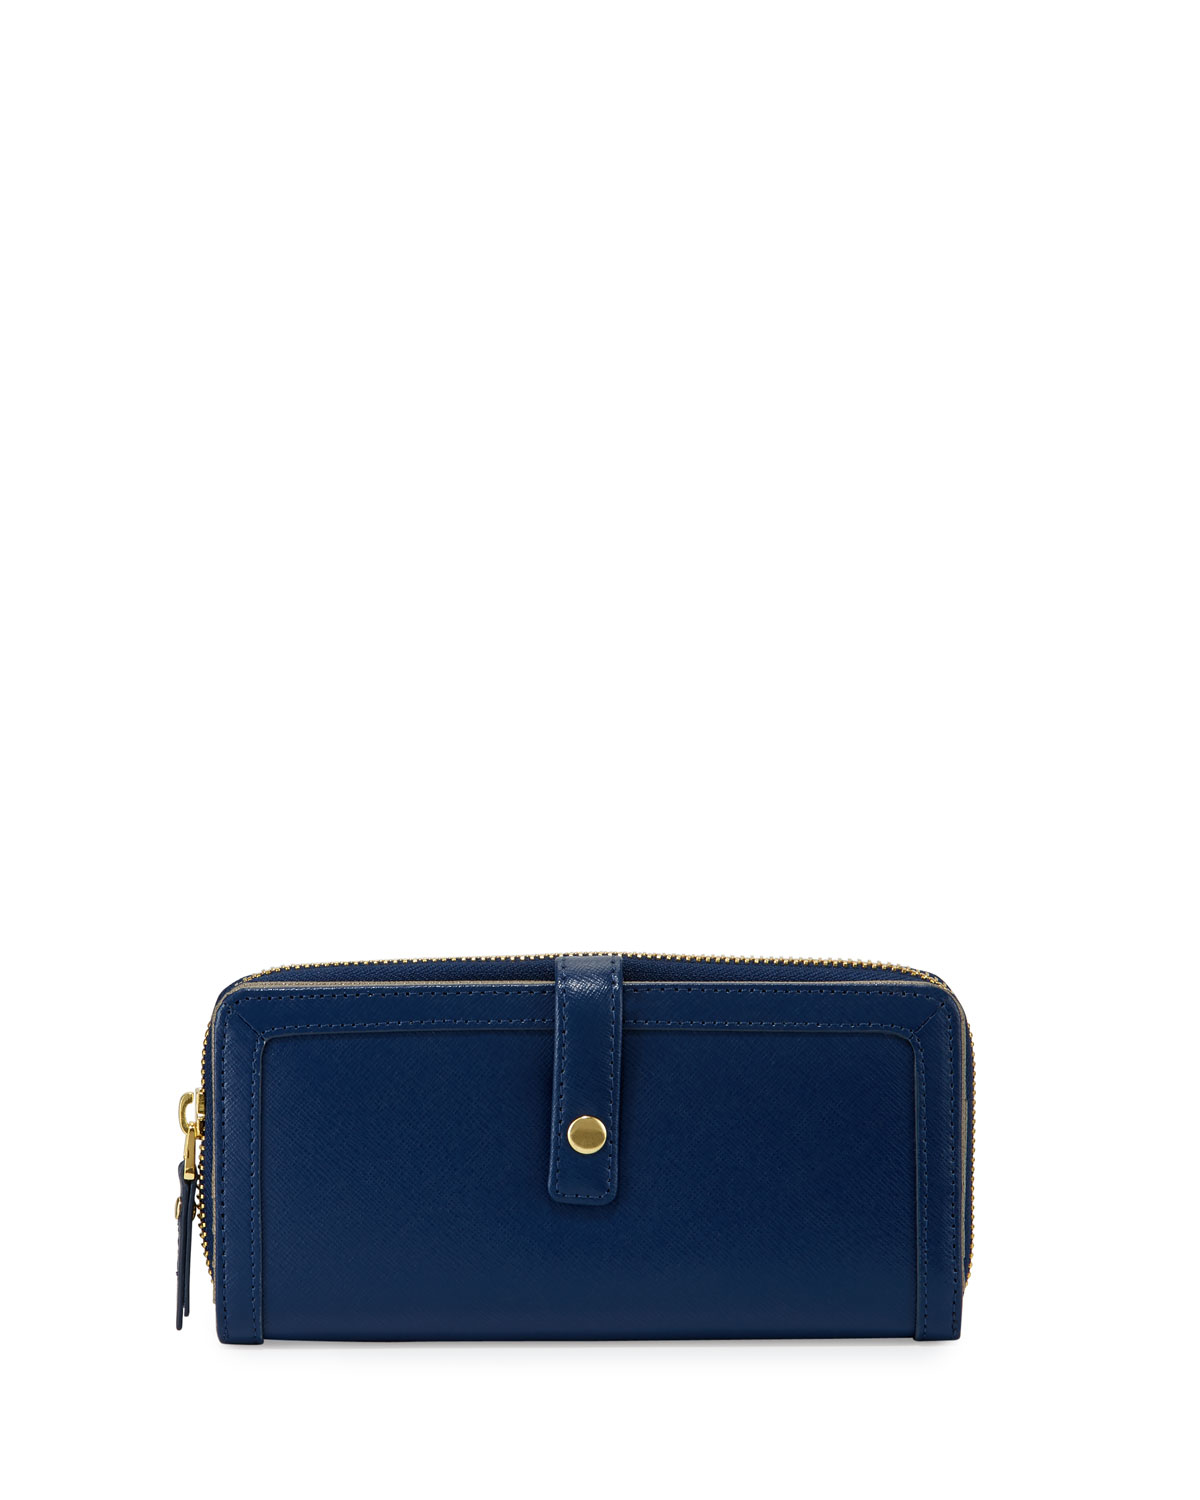 Neiman marcus Leather Tab Zip Wallet in Blue | Lyst